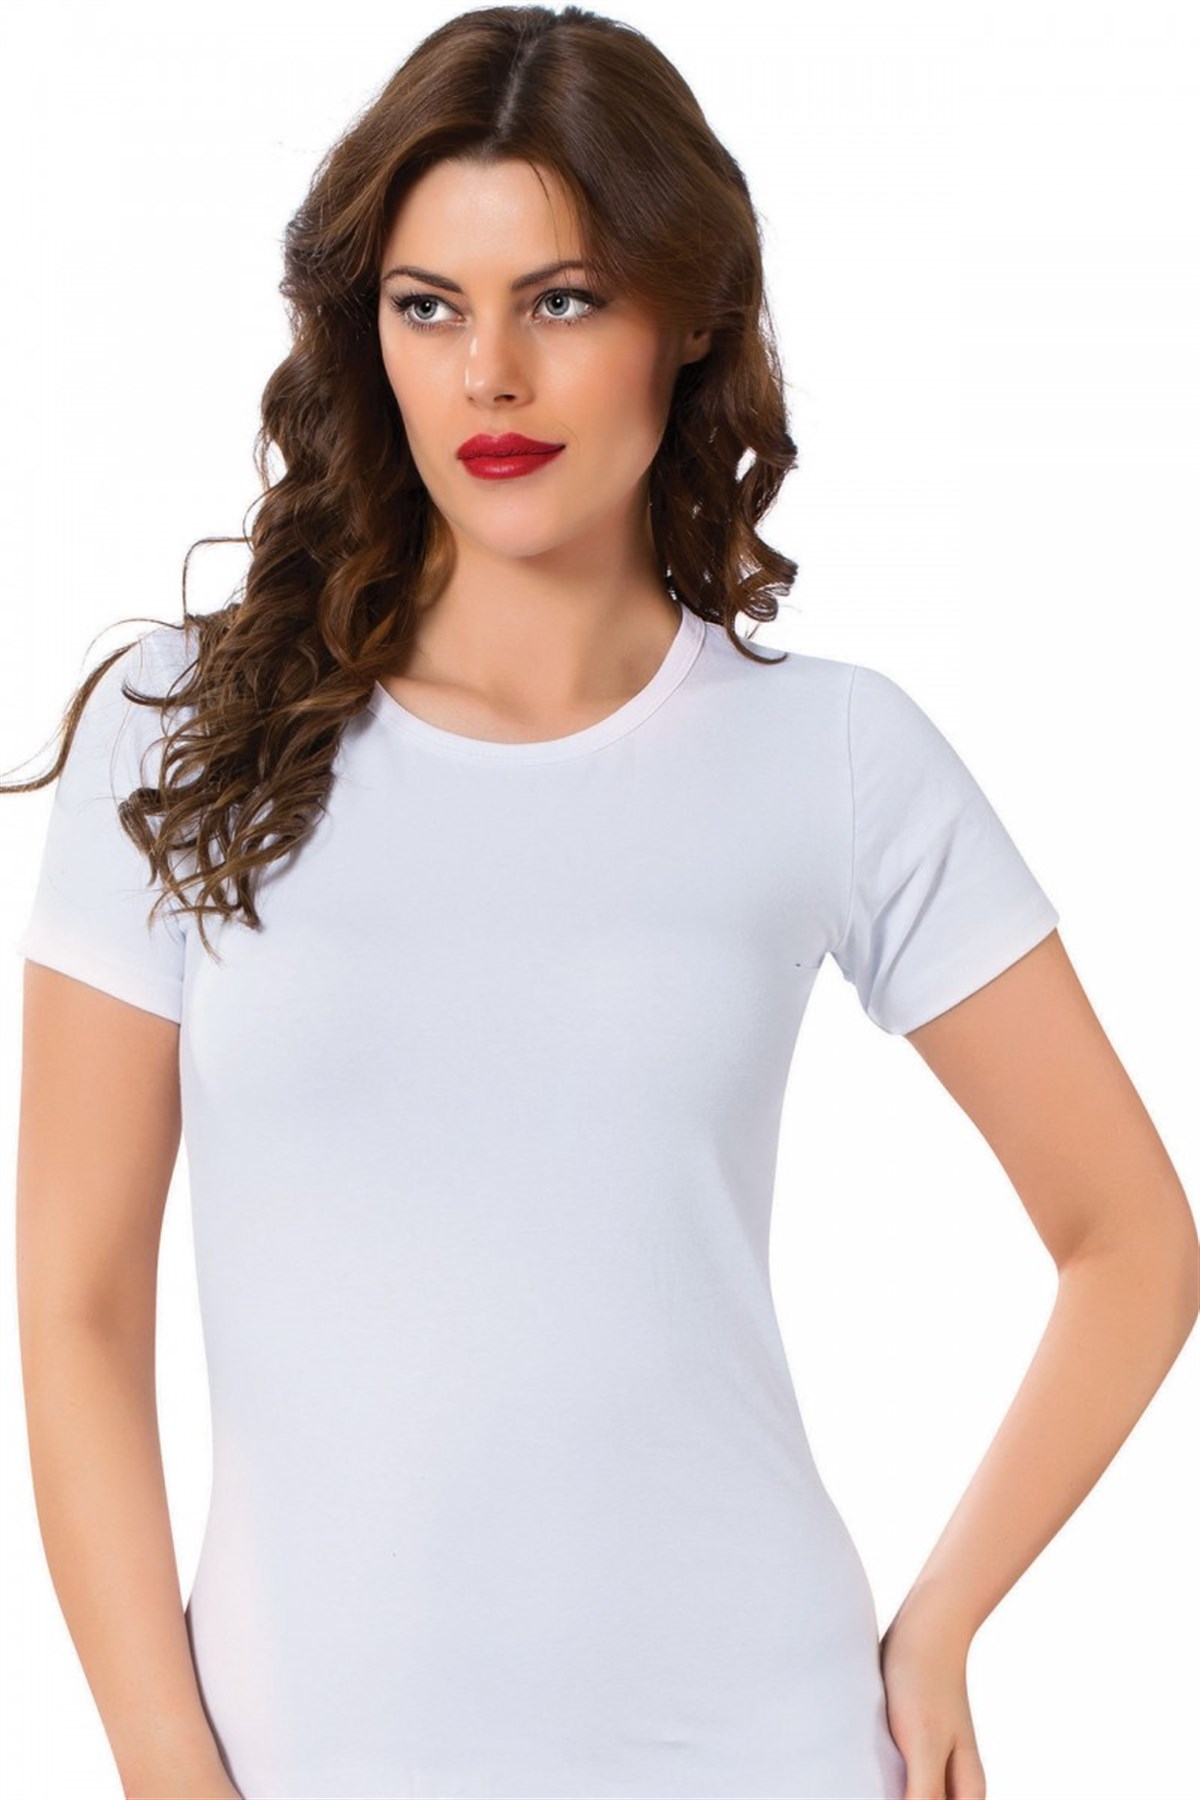 Moda Çizgi Bayan Kısa Kol Body 232B - 4XL | Beyaz